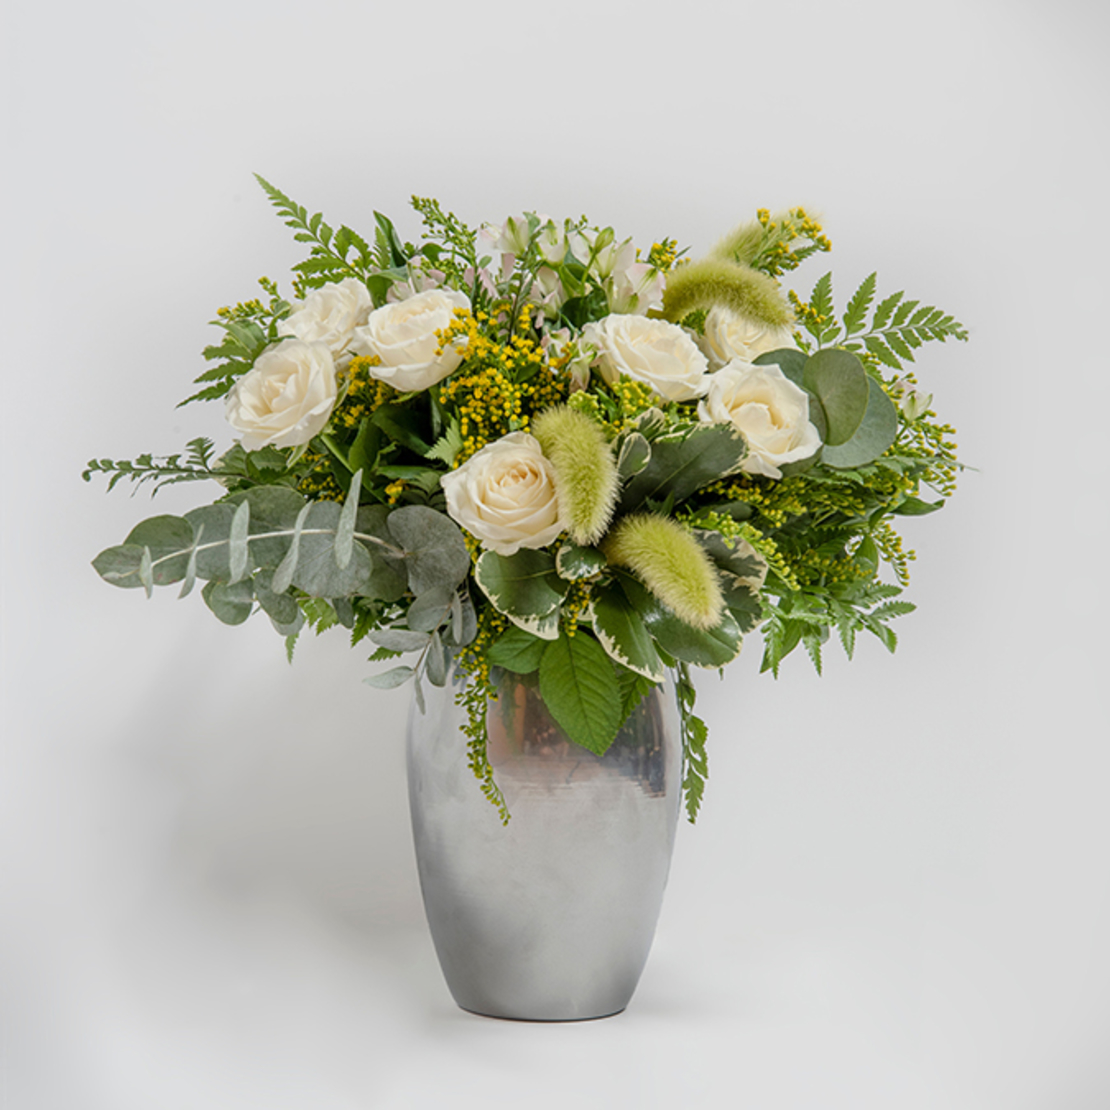 White Rose Flower Arrangement in a Vase